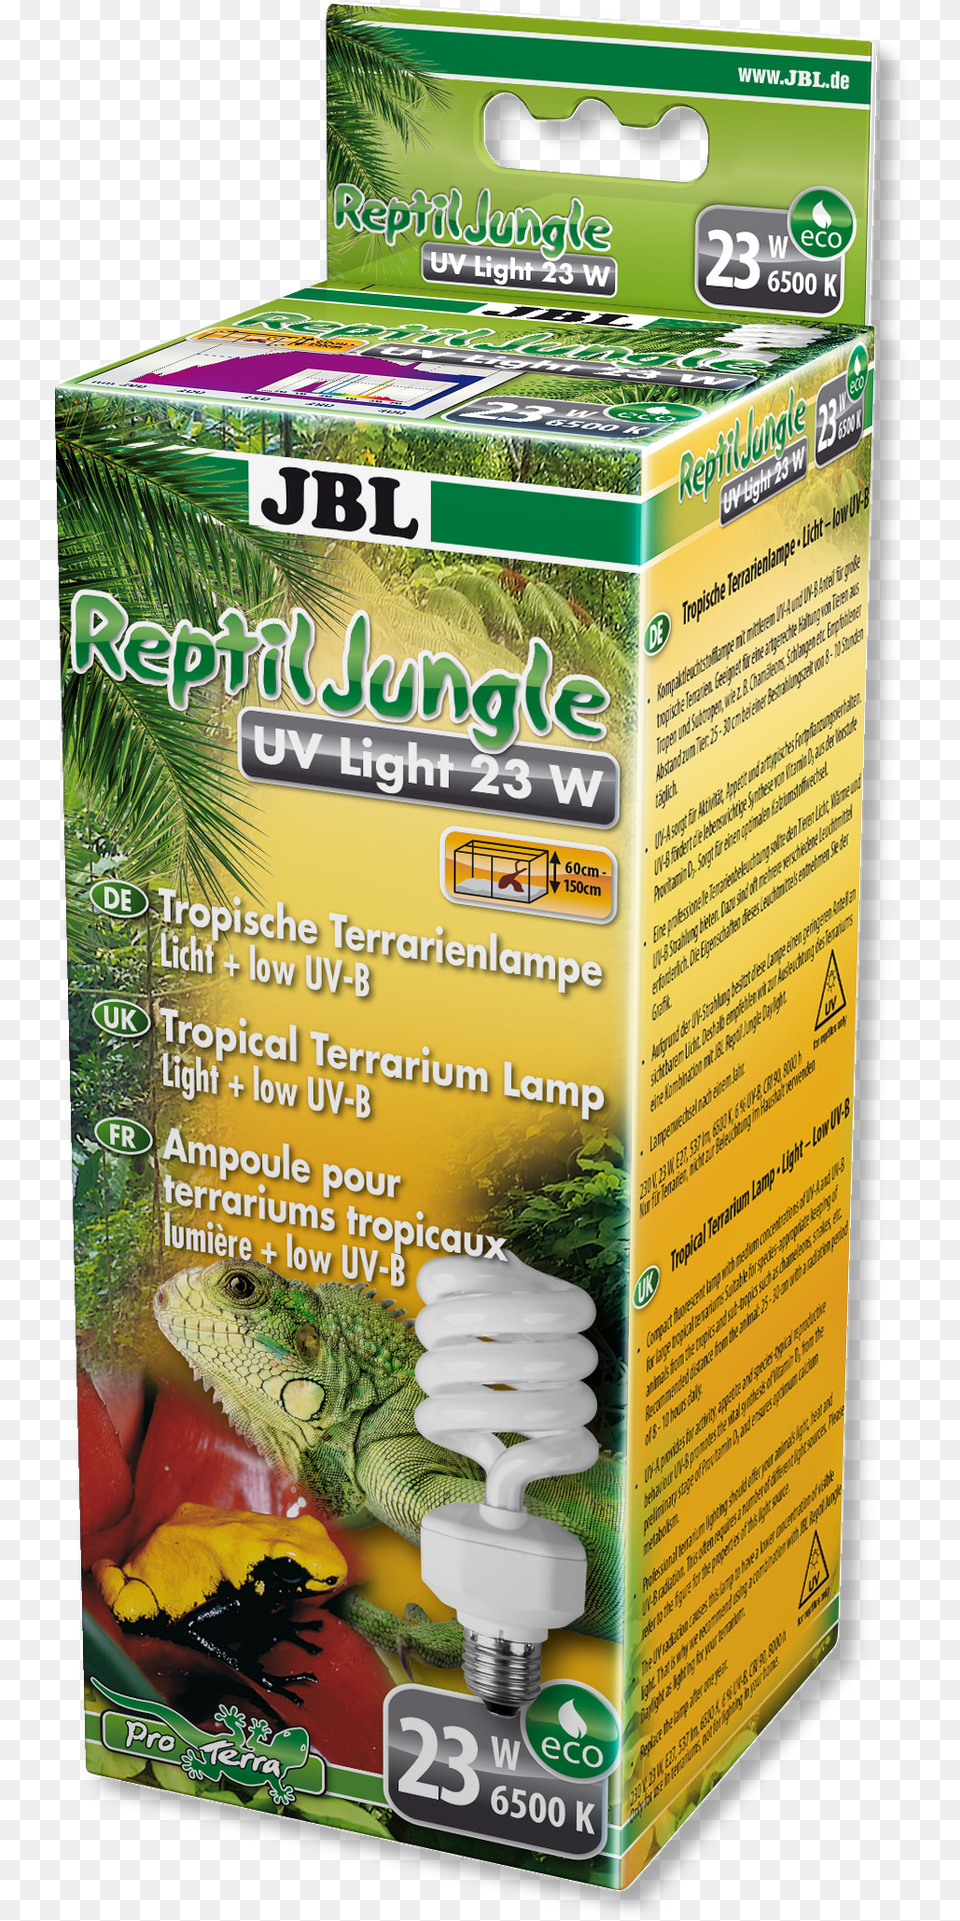 Jbl Gmbh Amp Co Jbl Reptiljungle Reptile Jungle Uv 310 Light Bulb, Herbal, Herbs, Plant, Animal Free Png Download